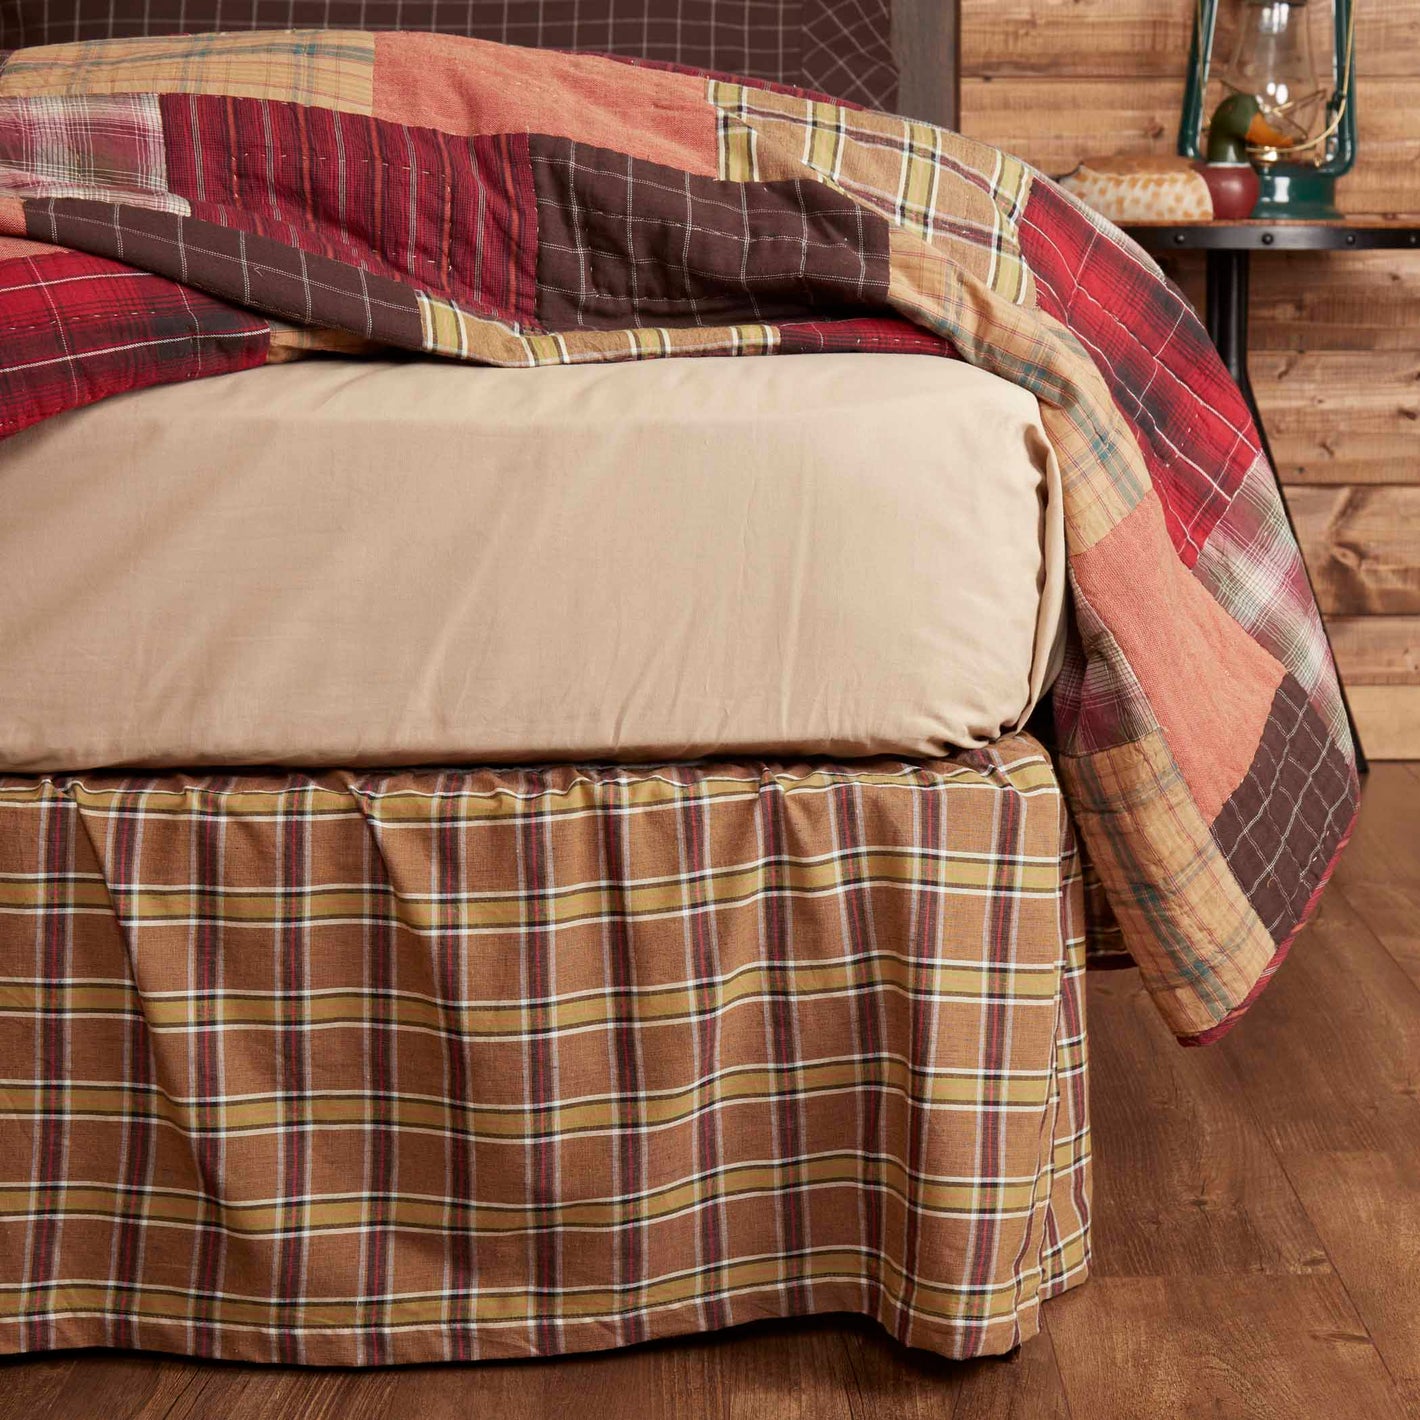 Oak & Asher Wyatt Twin Bed Skirt 39x76x16 By VHC Brands